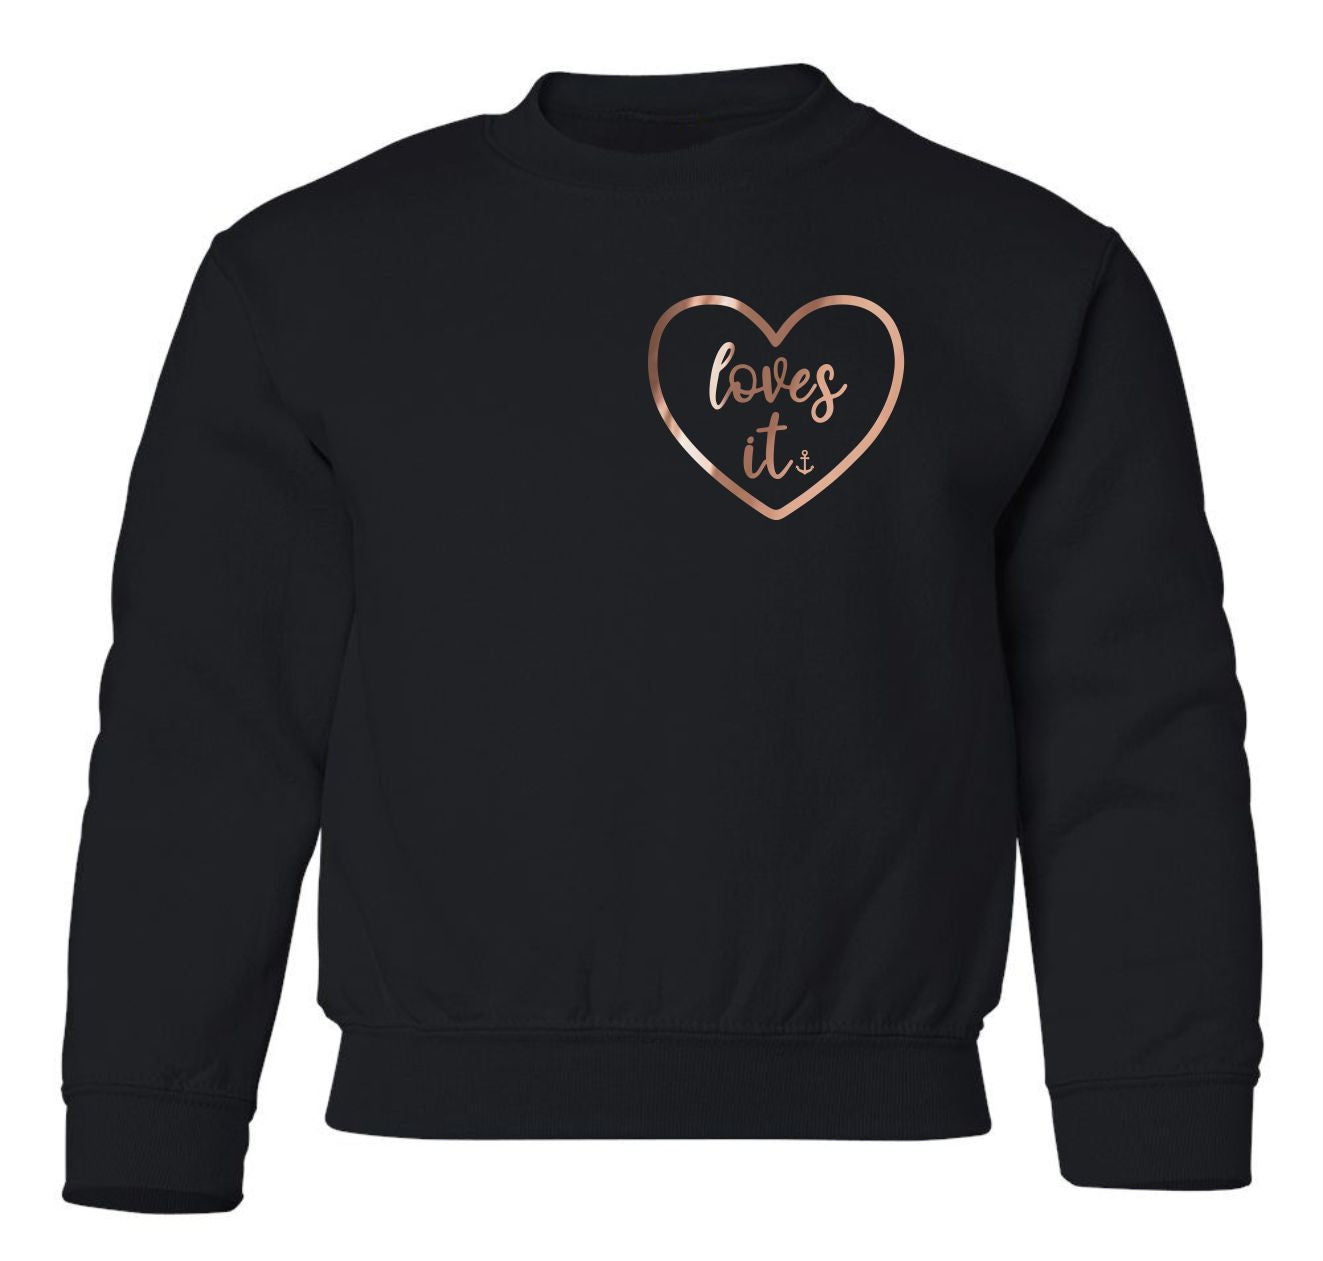 "Loves it" Toddler/Youth Crewneck Sweatshirt